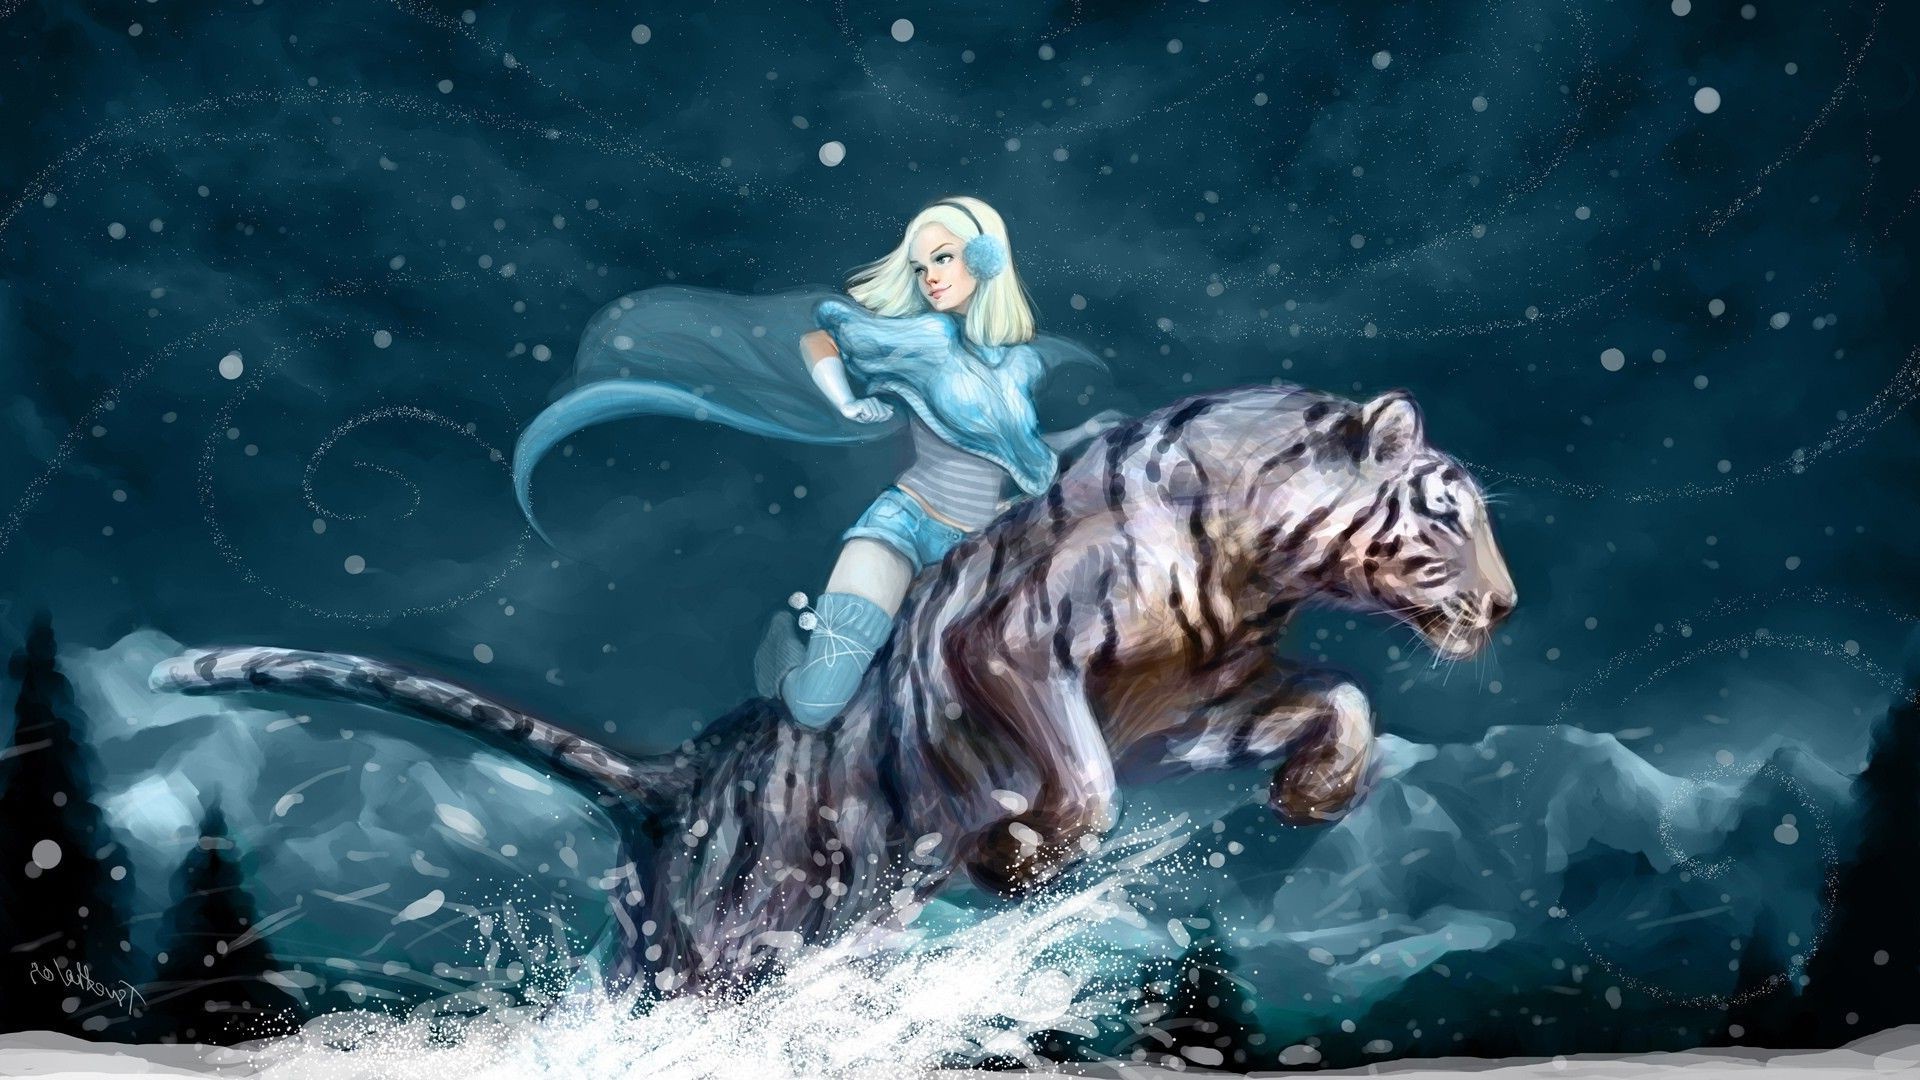 Fantasy Art Tiger Women Snow Wallpapers Hd Desktop